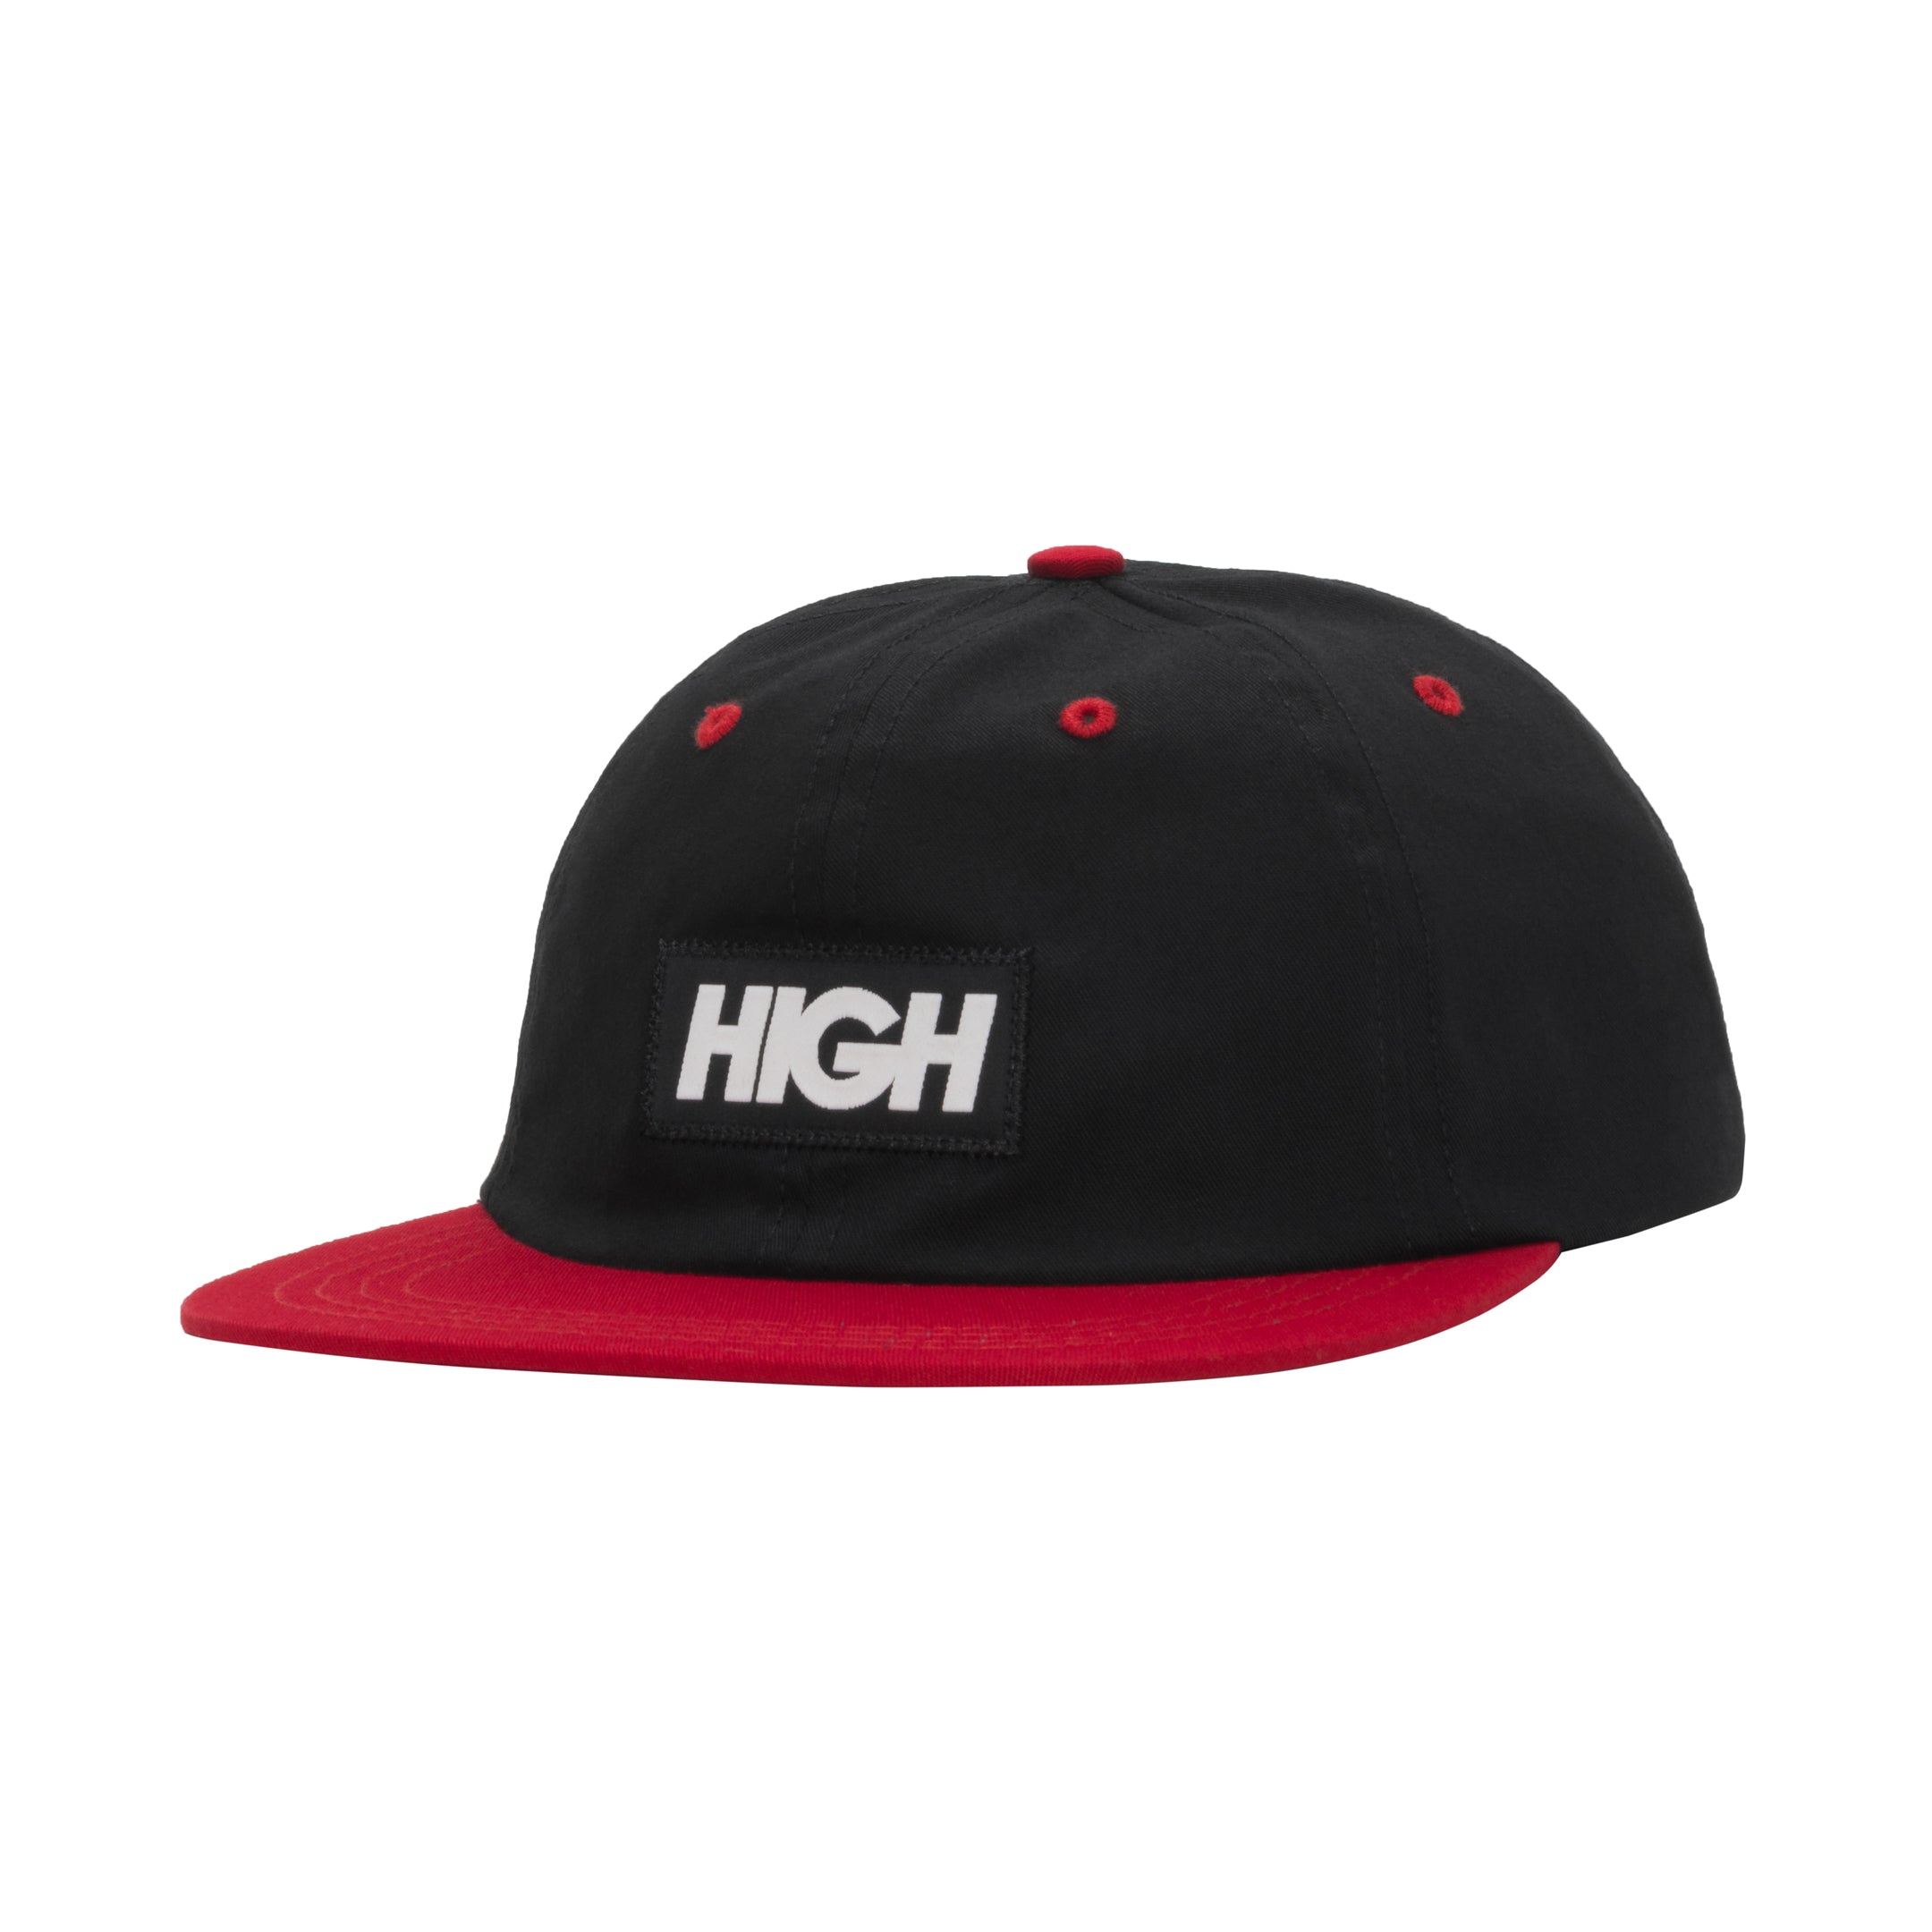 HIGH - Boné 6 Panel Logo Black/ Red